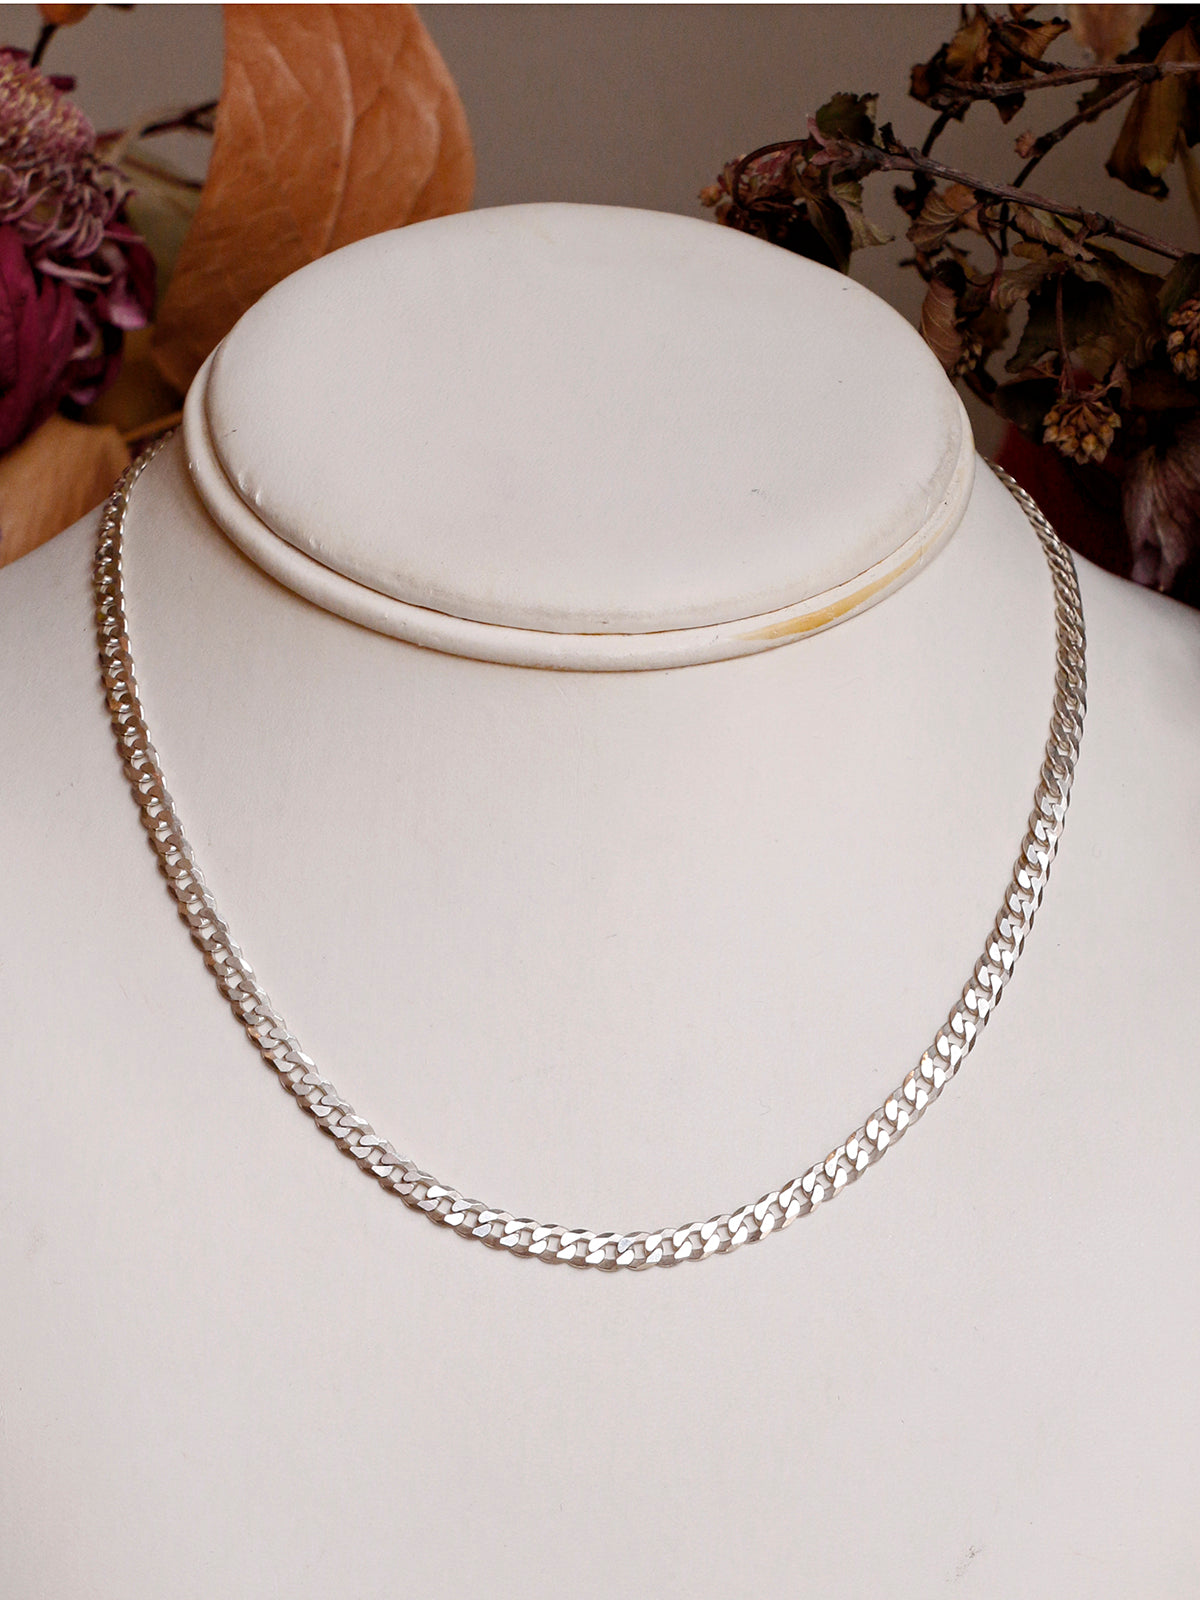 Susan Rifkin Silver Curb Chain Necklace